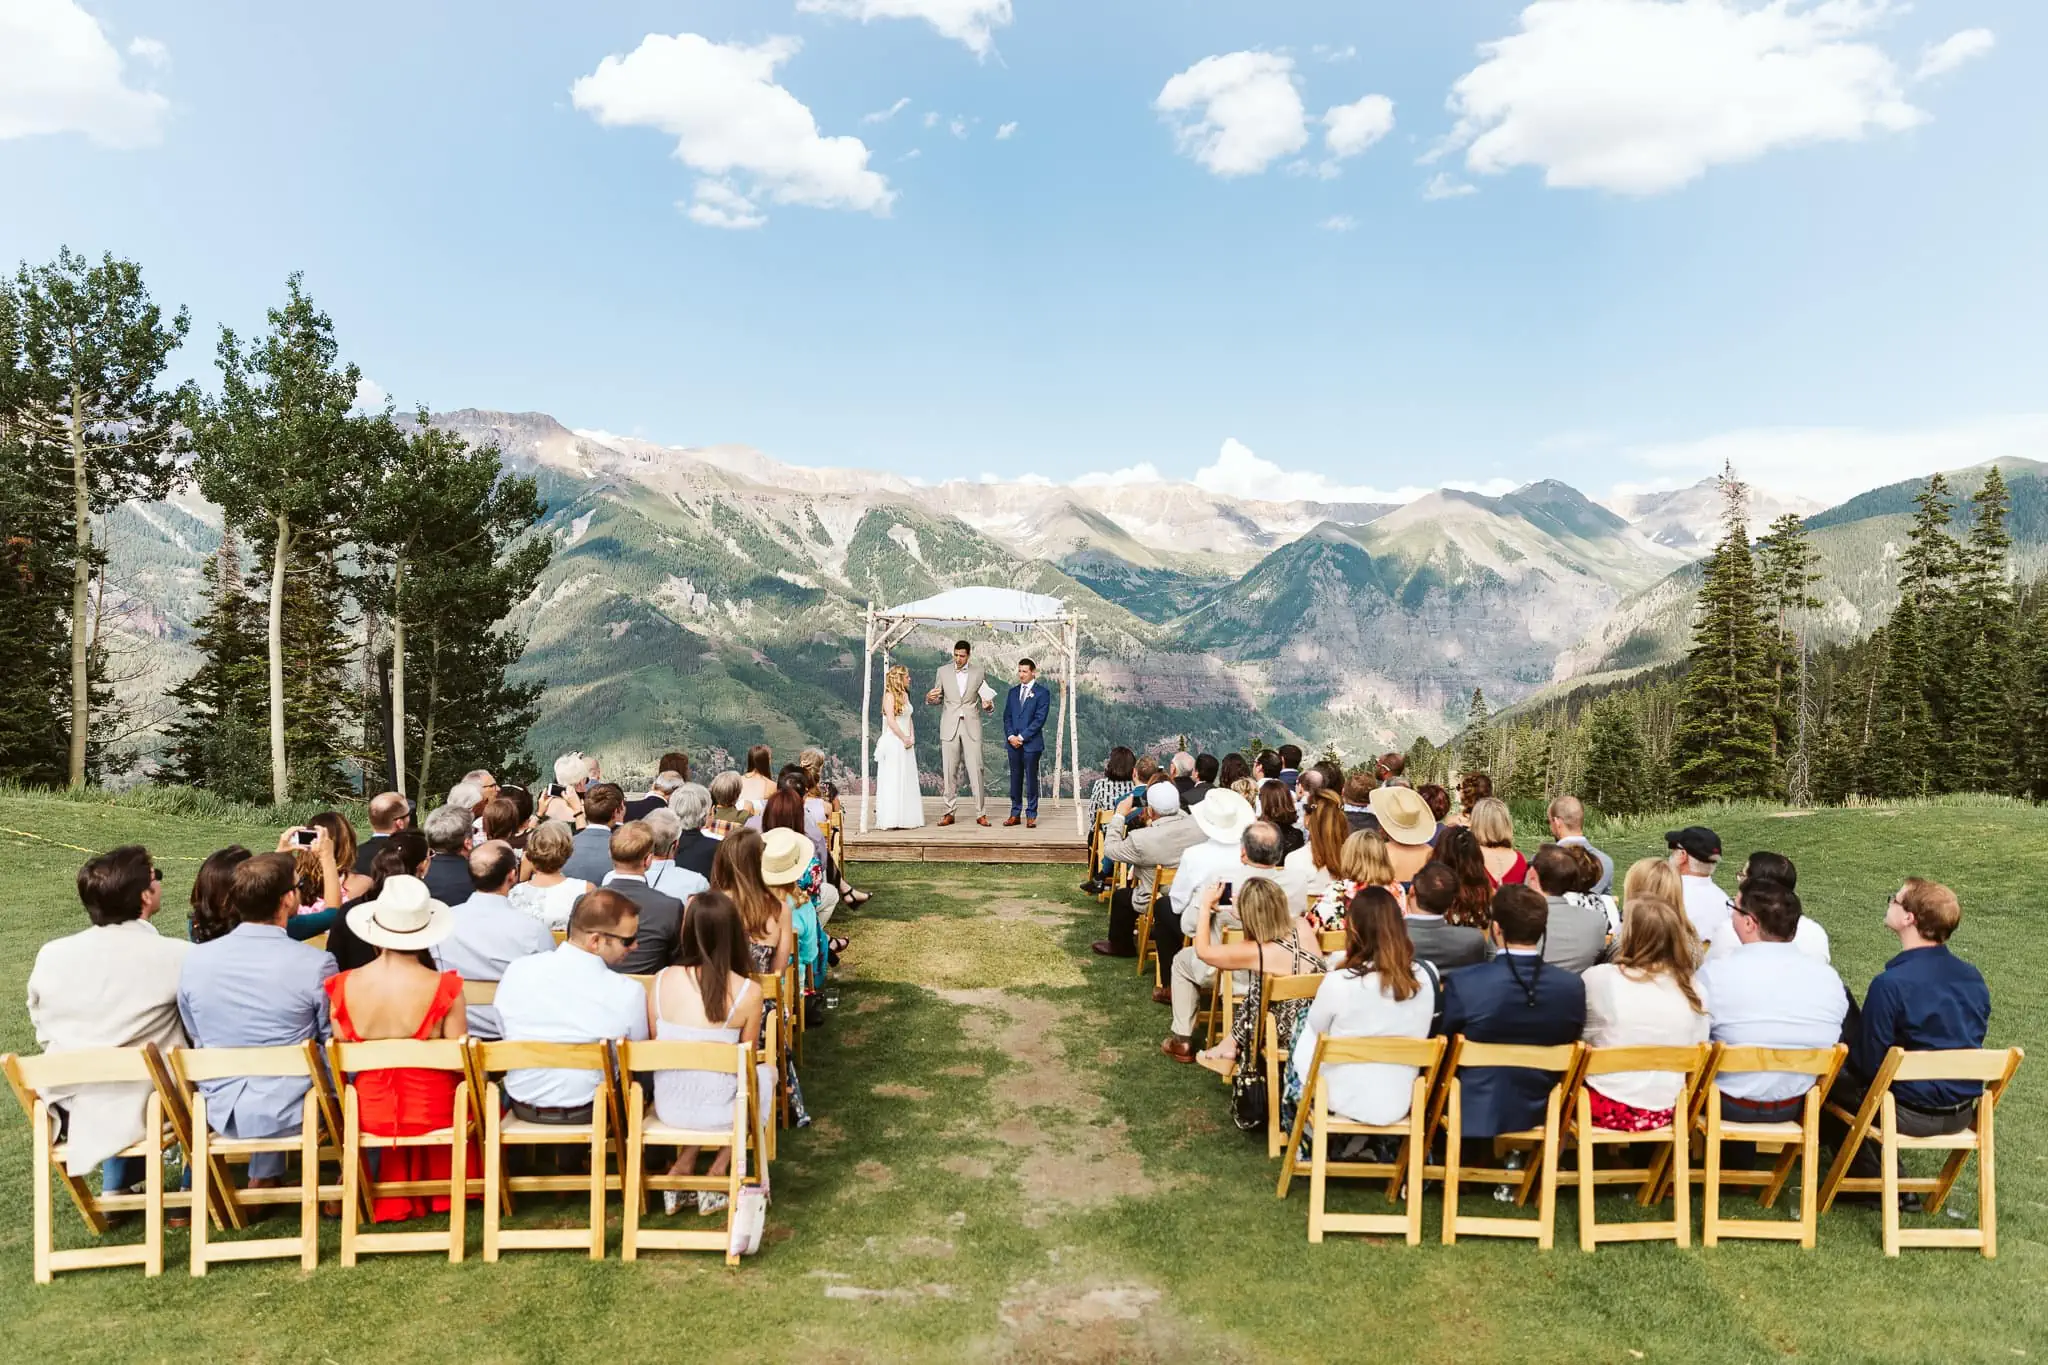 Wedding ceremony at San Sophia Overlook in Telluride